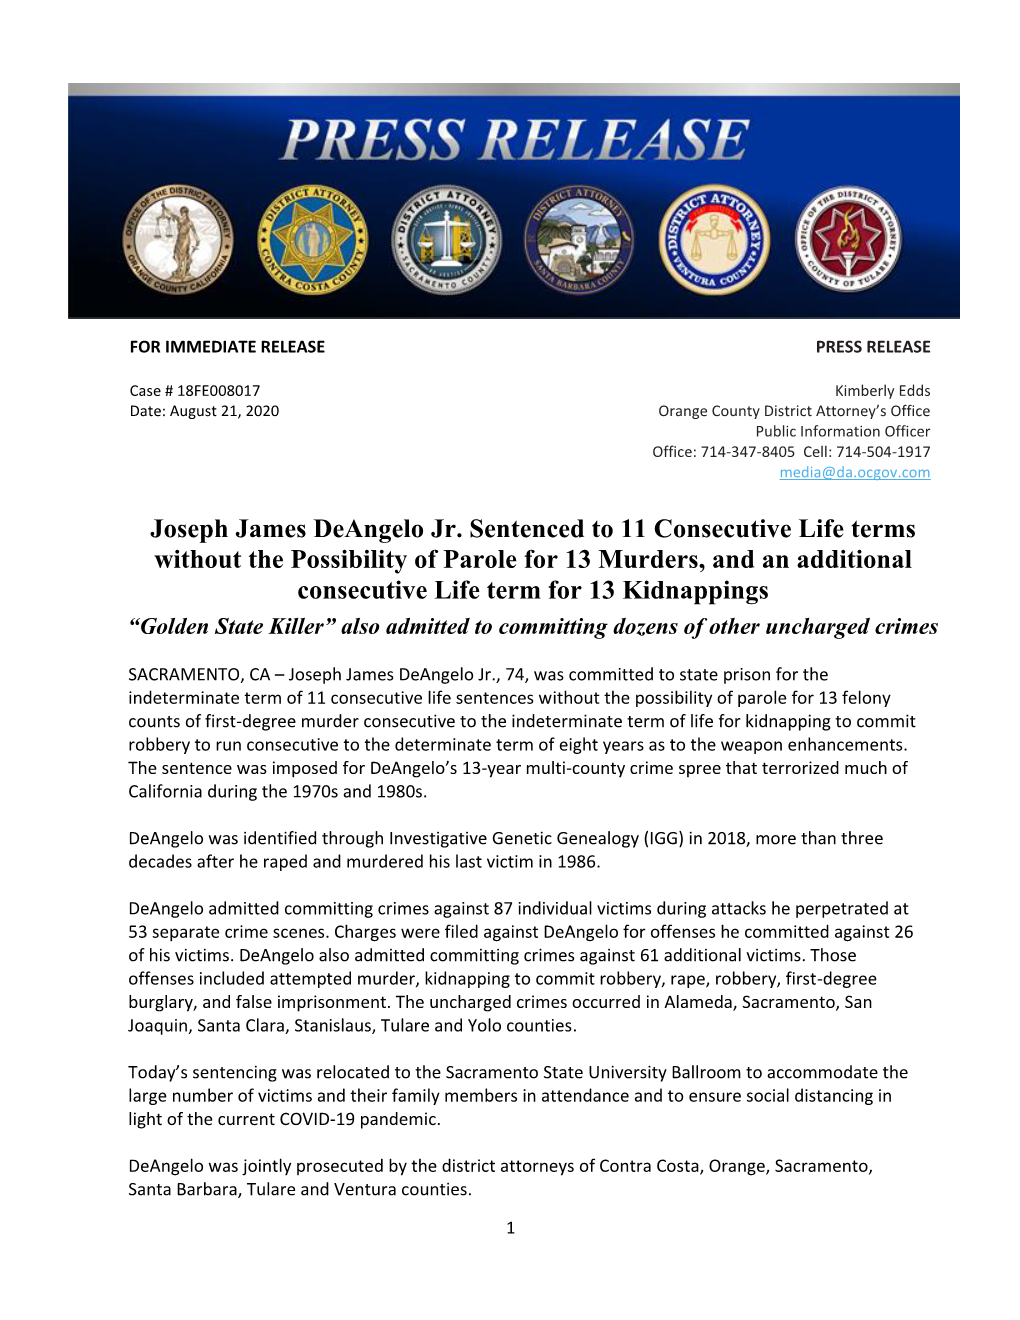 Press Release: Sentencing, People Vs. Joseph James Deangelo